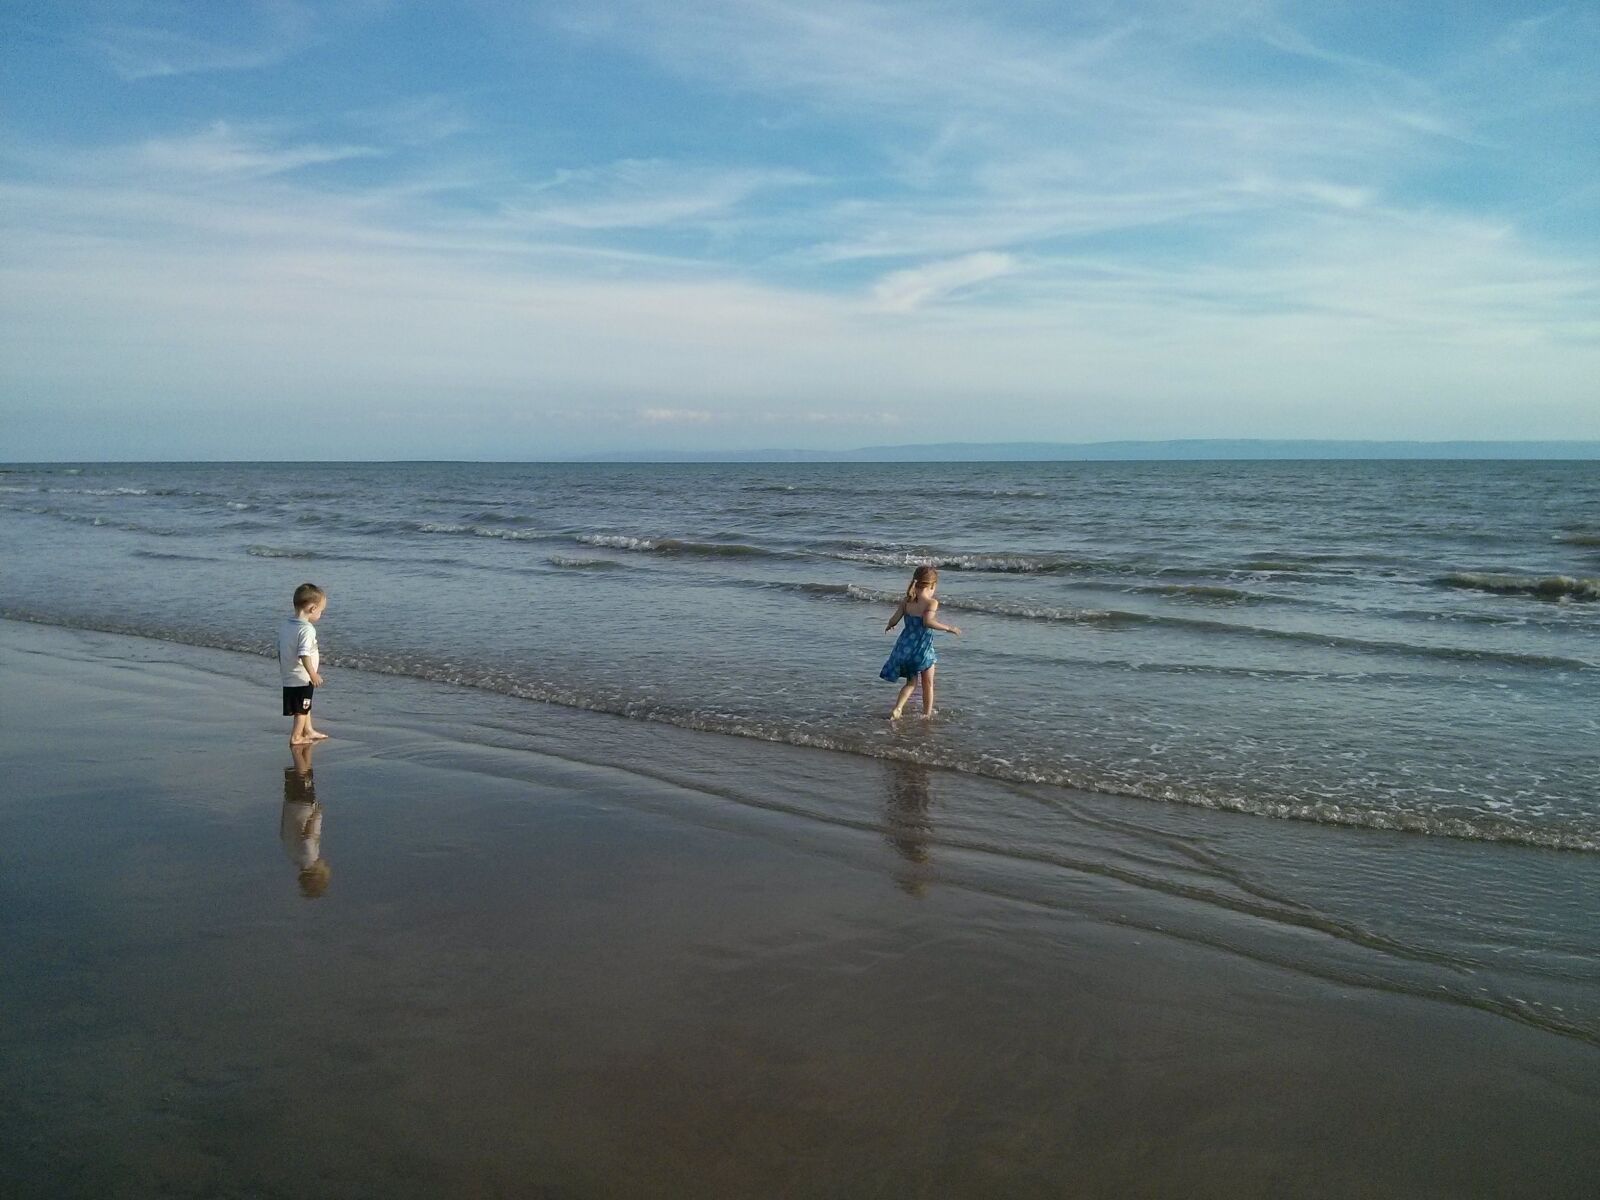 LG Nexus 4 sample photo. Beach, outdoors, seaside photography